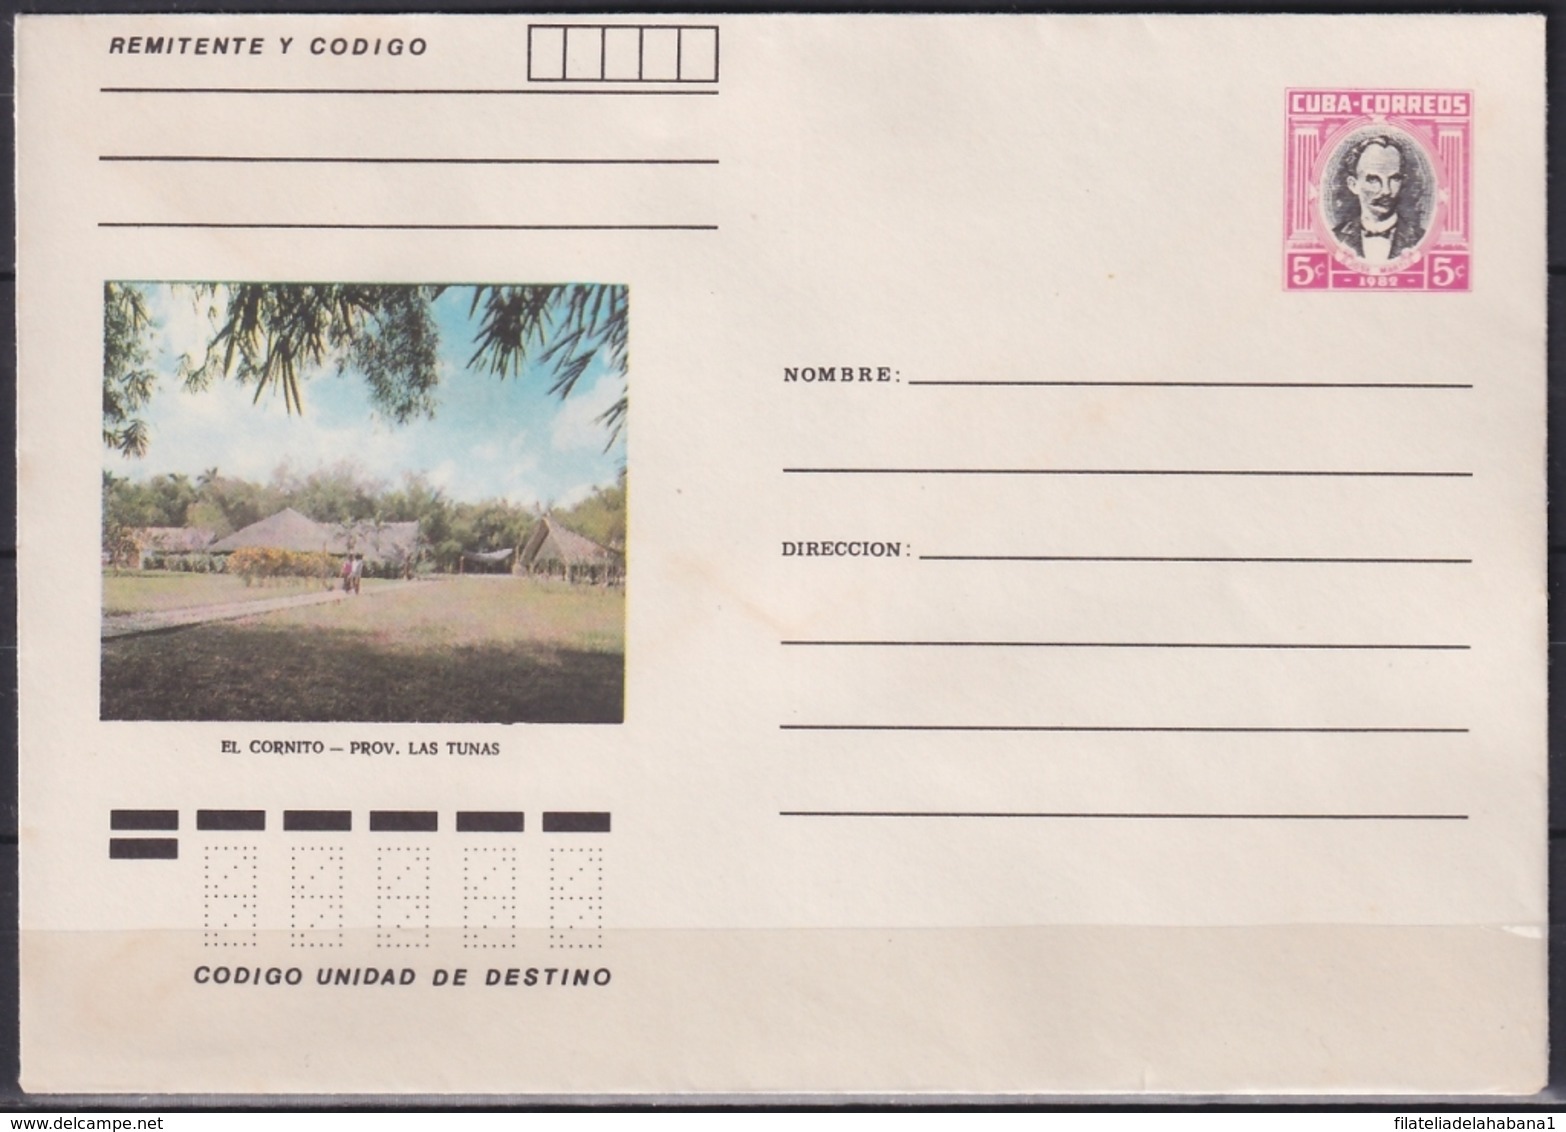 1982-EP-202 CUBA 1982 5c POSTAL STATIONERY COVER. LAS TUNAS, EL CORNITO. - Covers & Documents